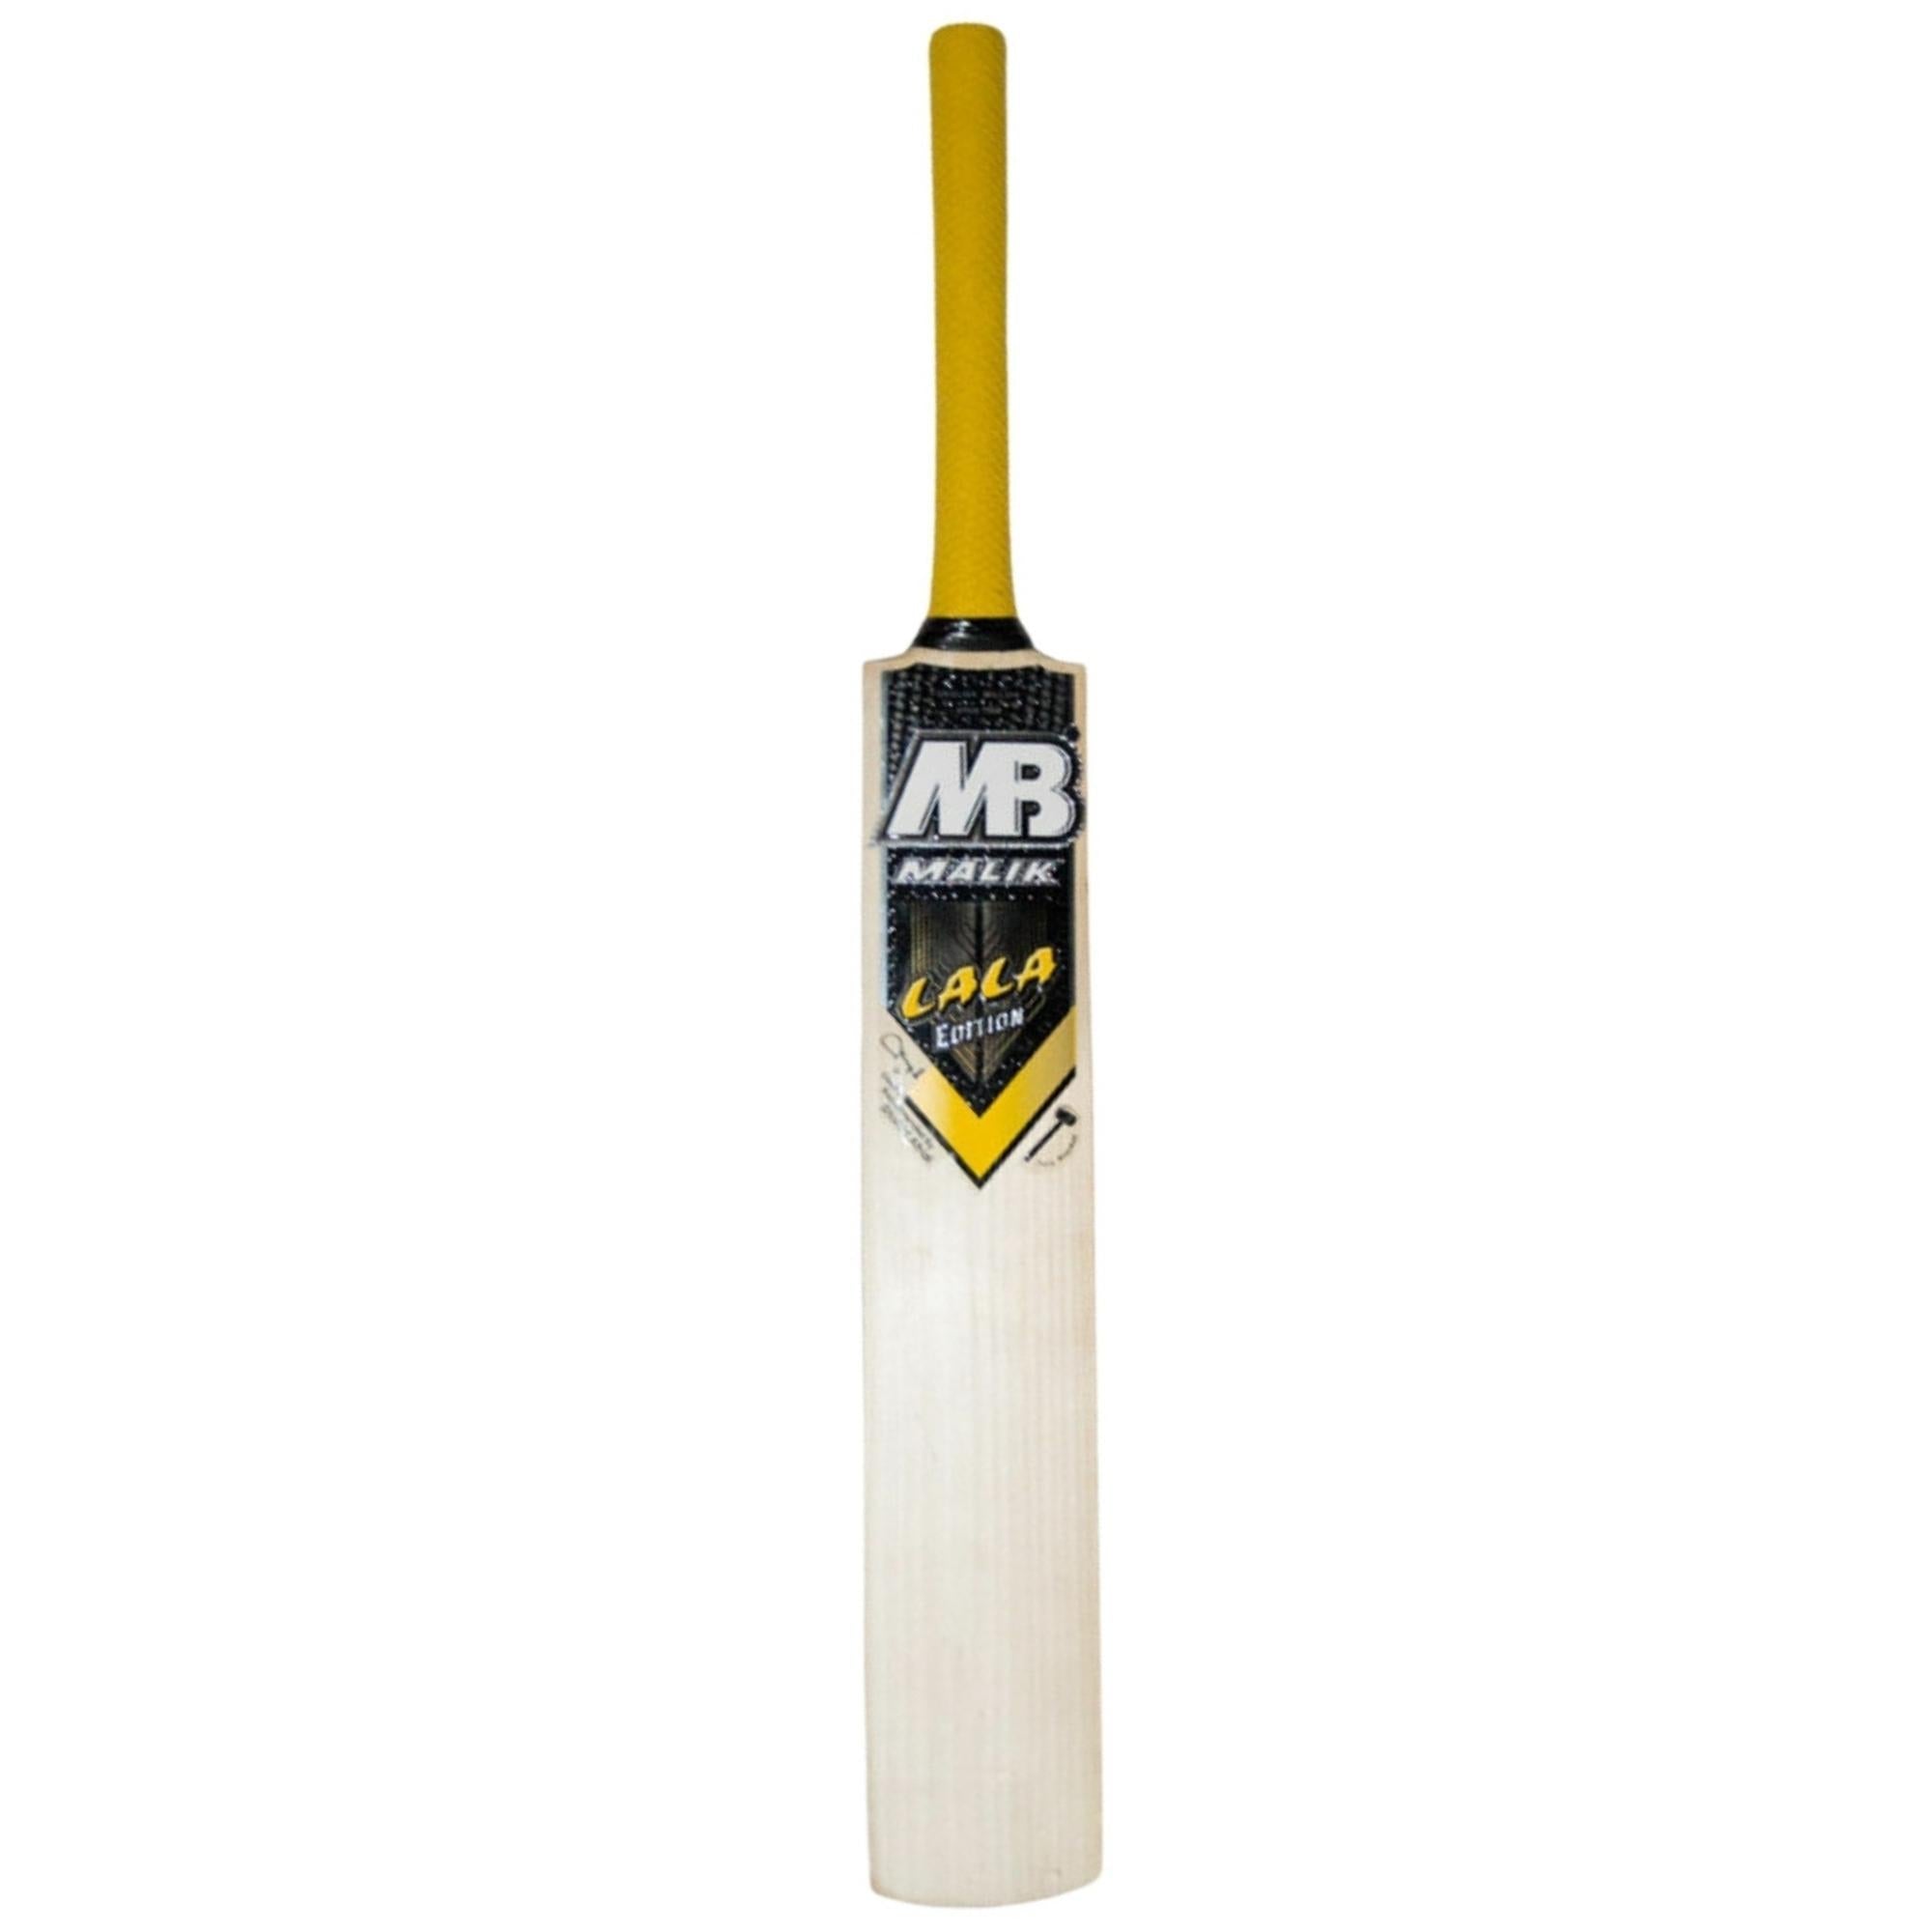 MB Malik Lala Gold Edition Cricket Bat Classic Edition